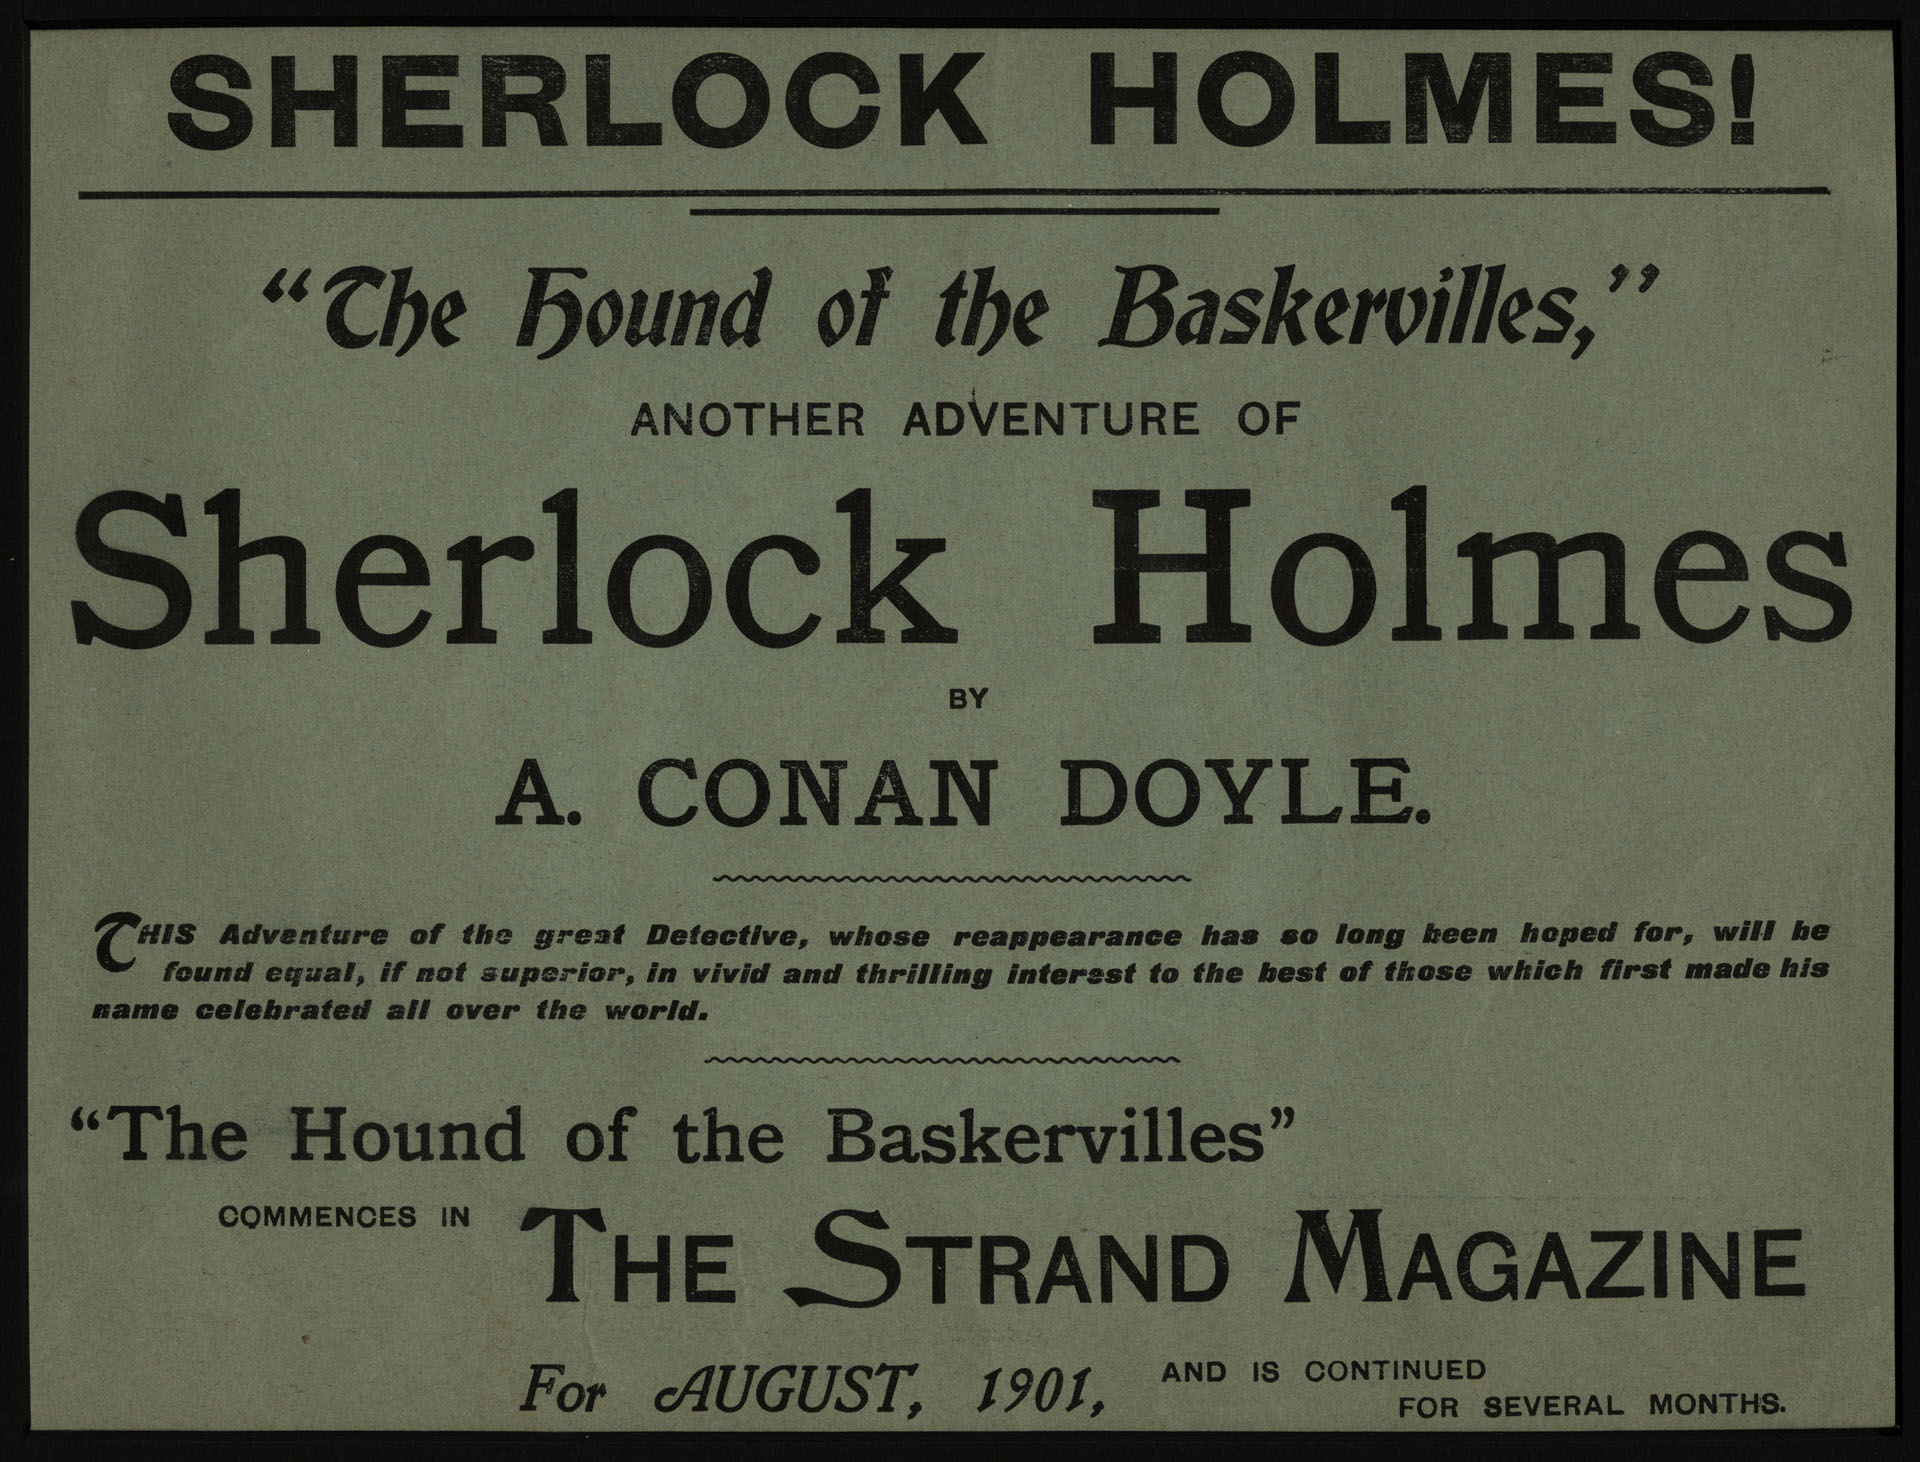 The Hound Of The Baskervilles HD wallpapers, Desktop wallpaper - most viewed